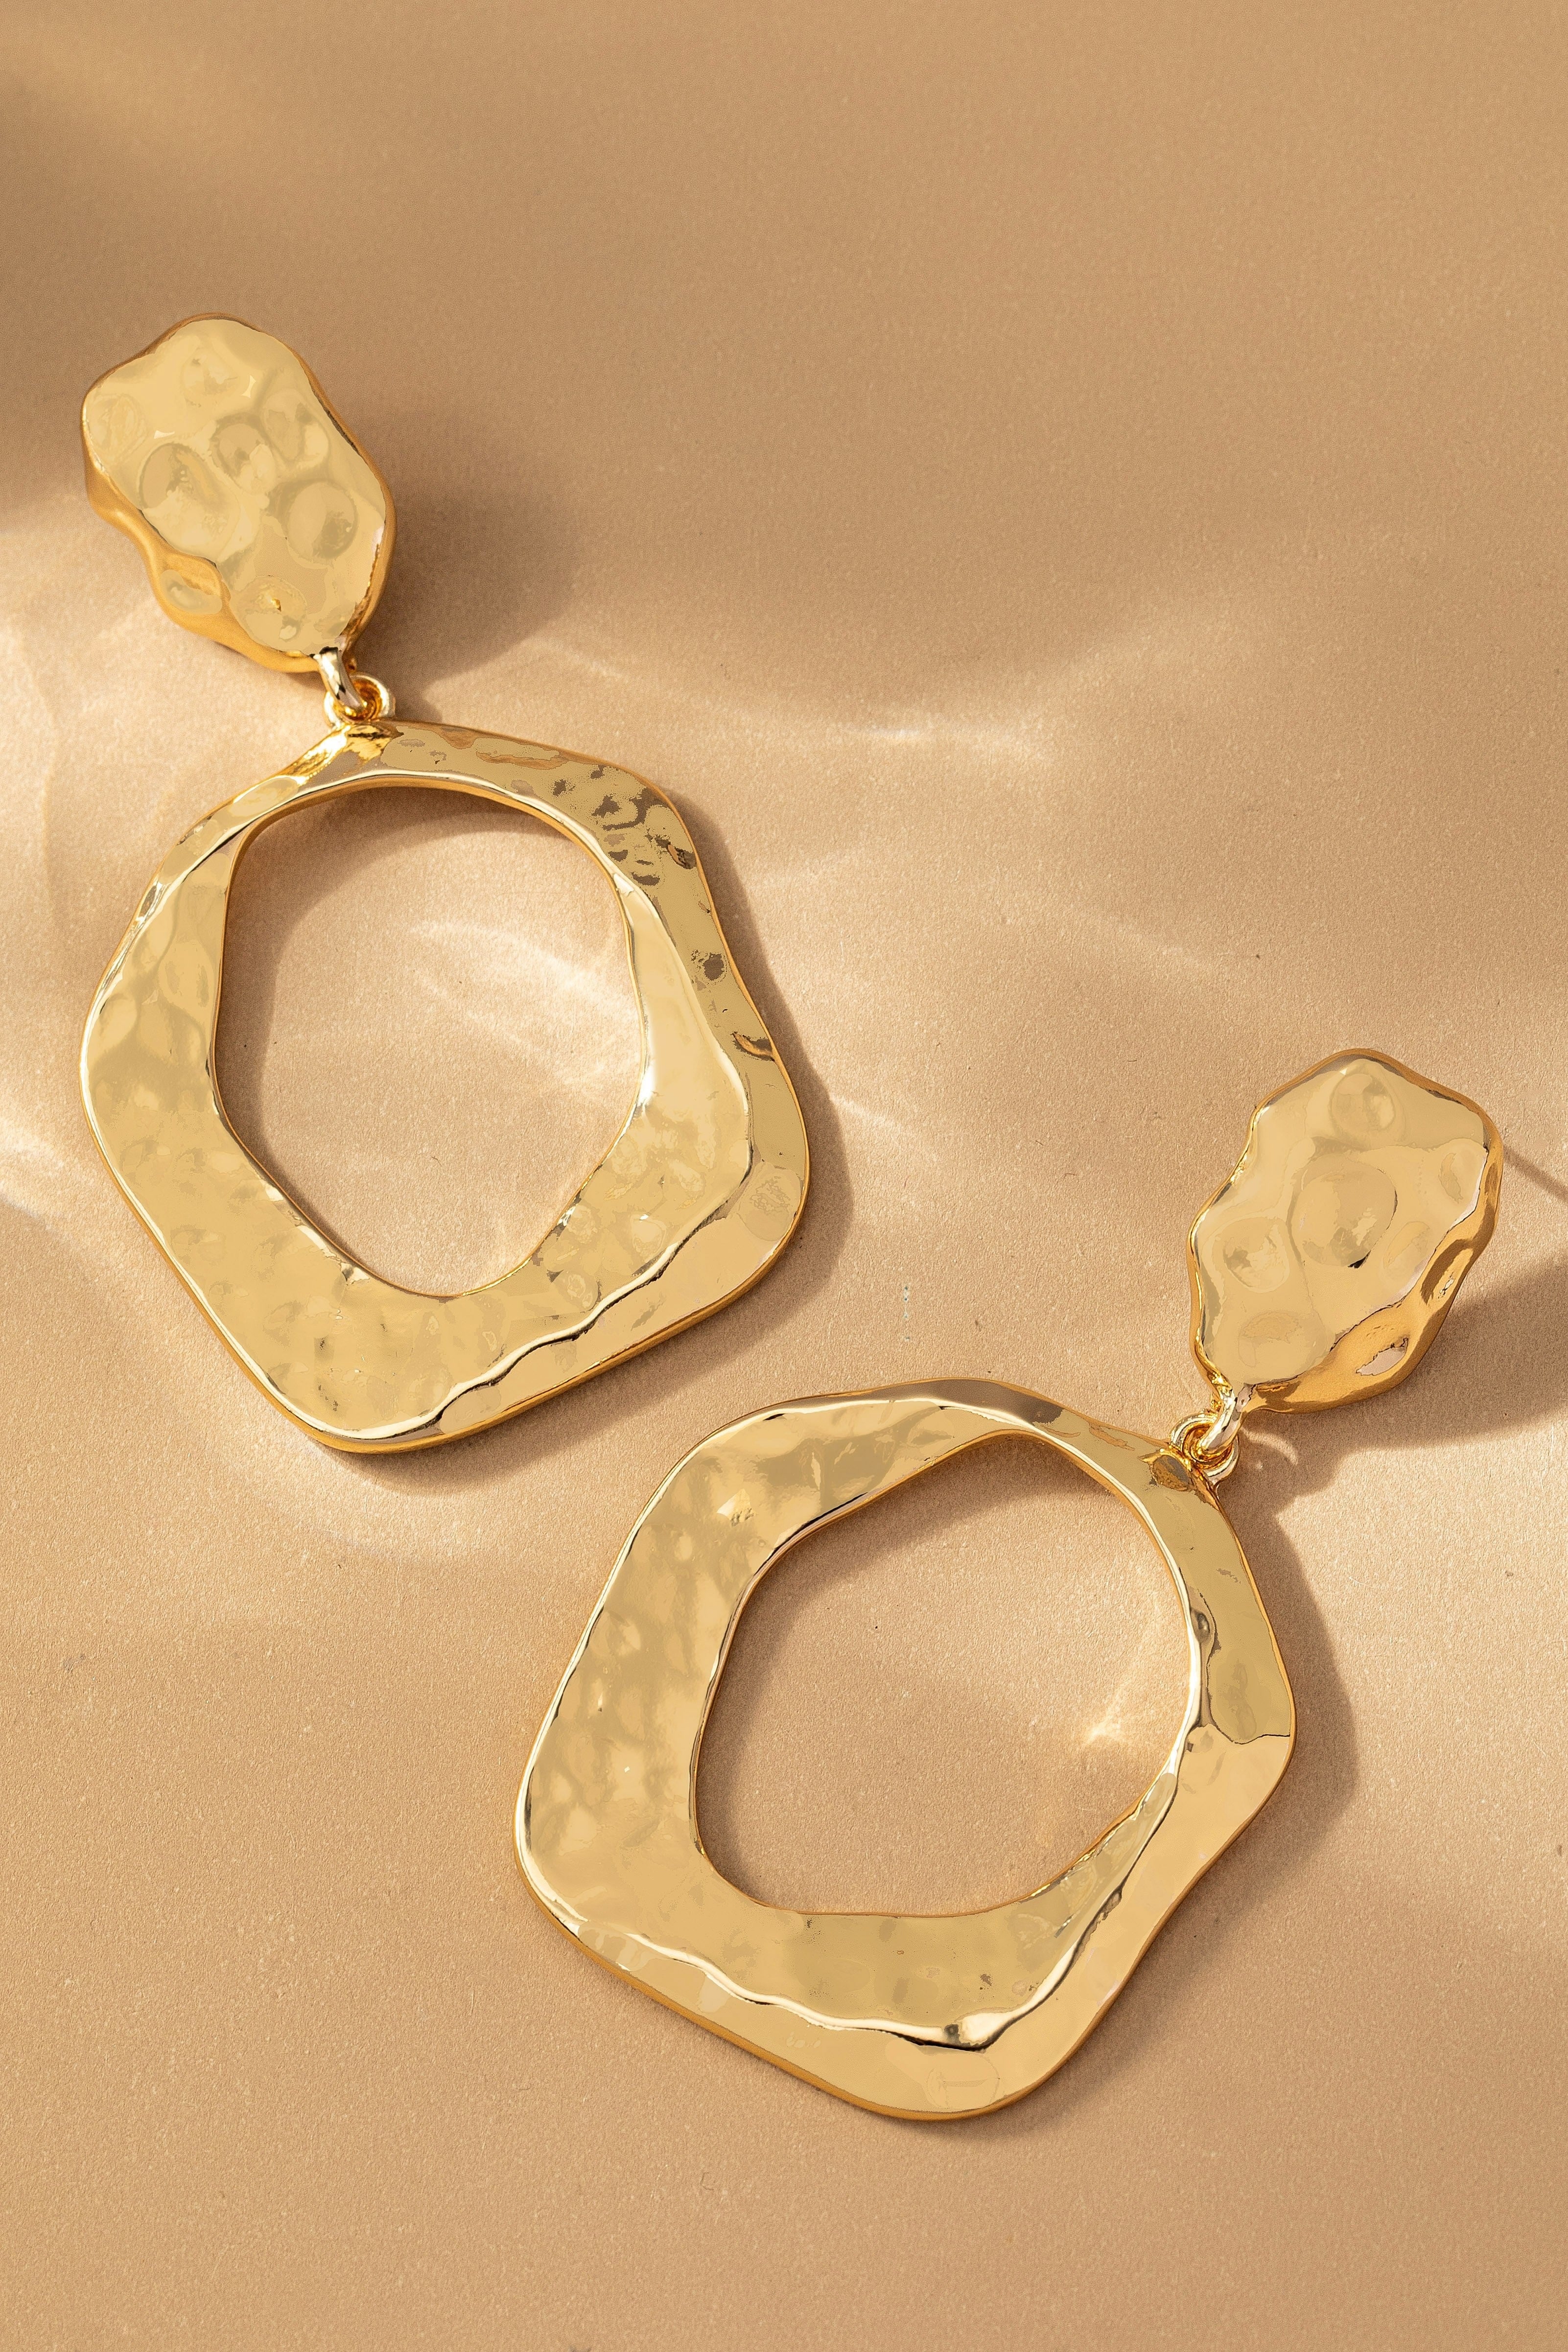 LA3accessories Jewelry - Earrings Large Hammered Hoop Drop Earrings In Gold